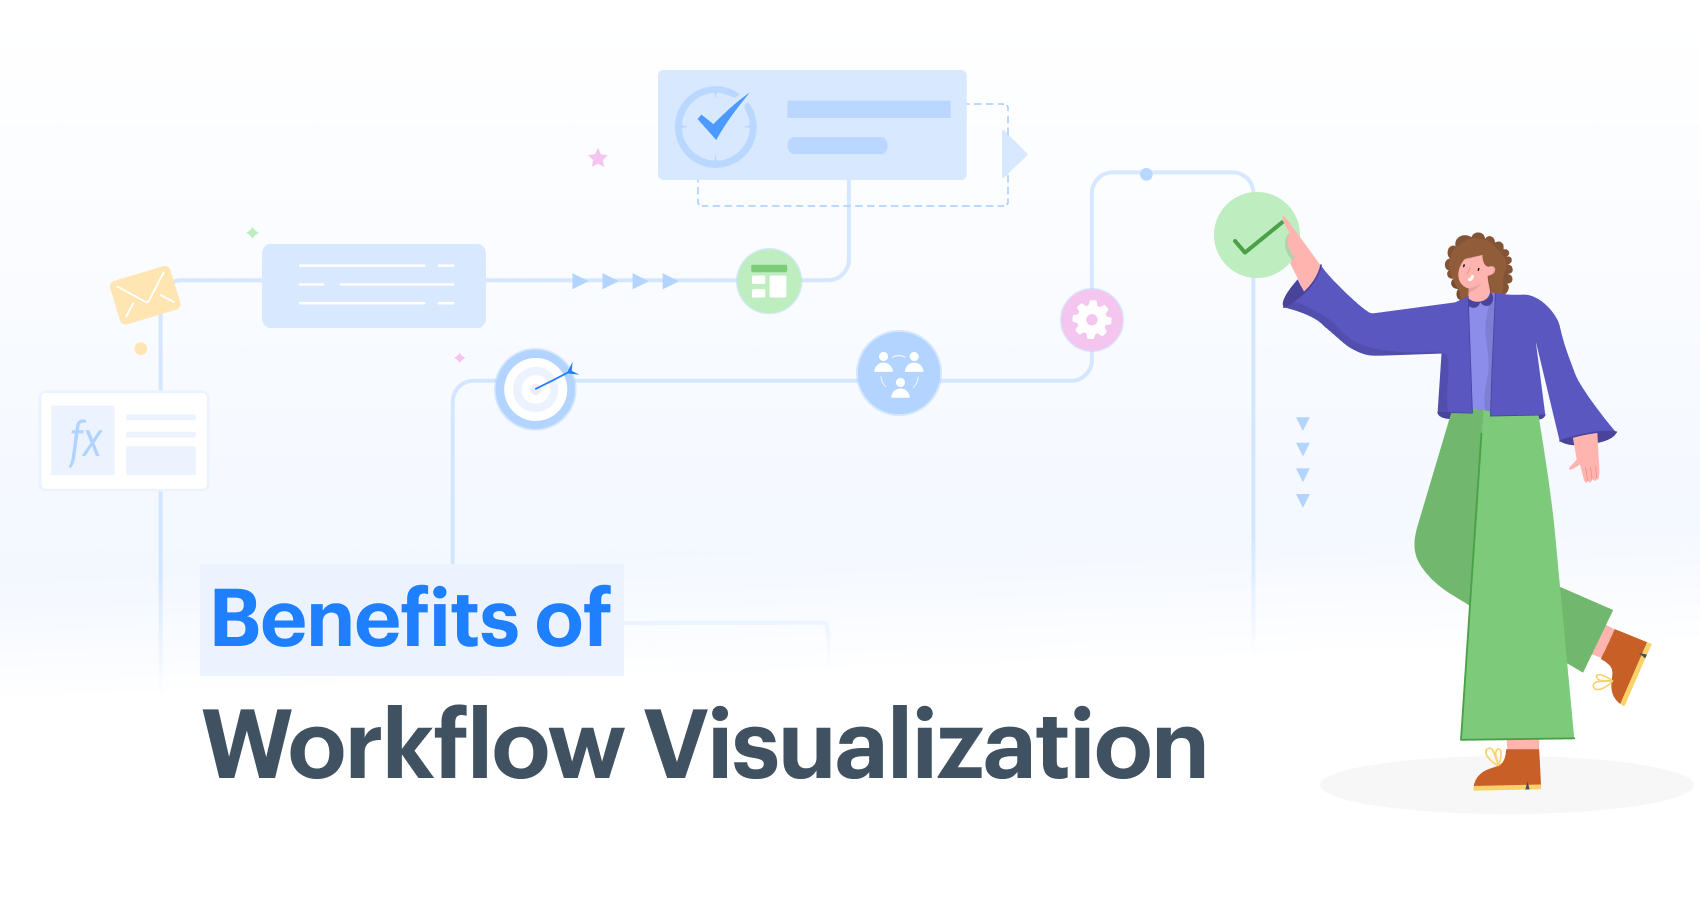 Benefits of Workflow Visualization